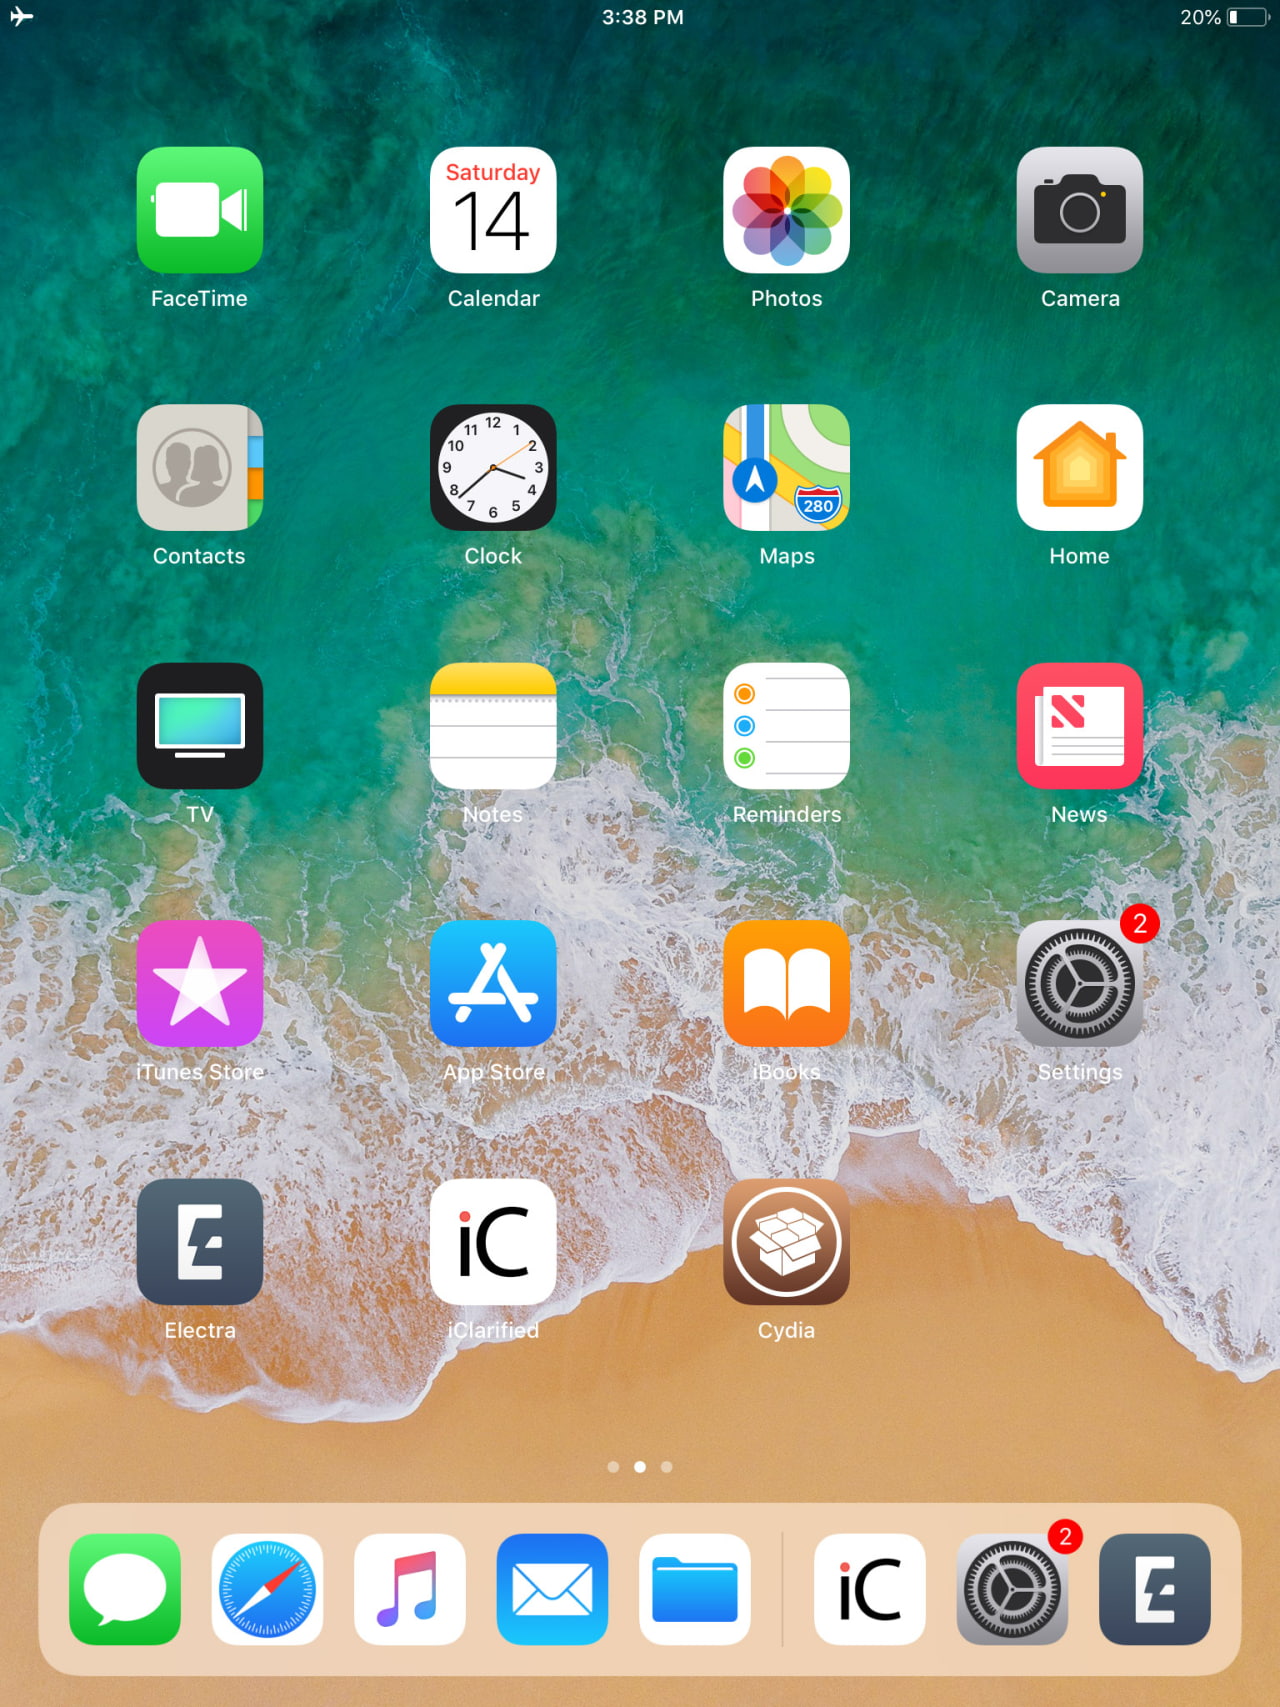 How to Jailbreak Your iPad on iOS 11.2 - iOS 11.3.1 Using ...
